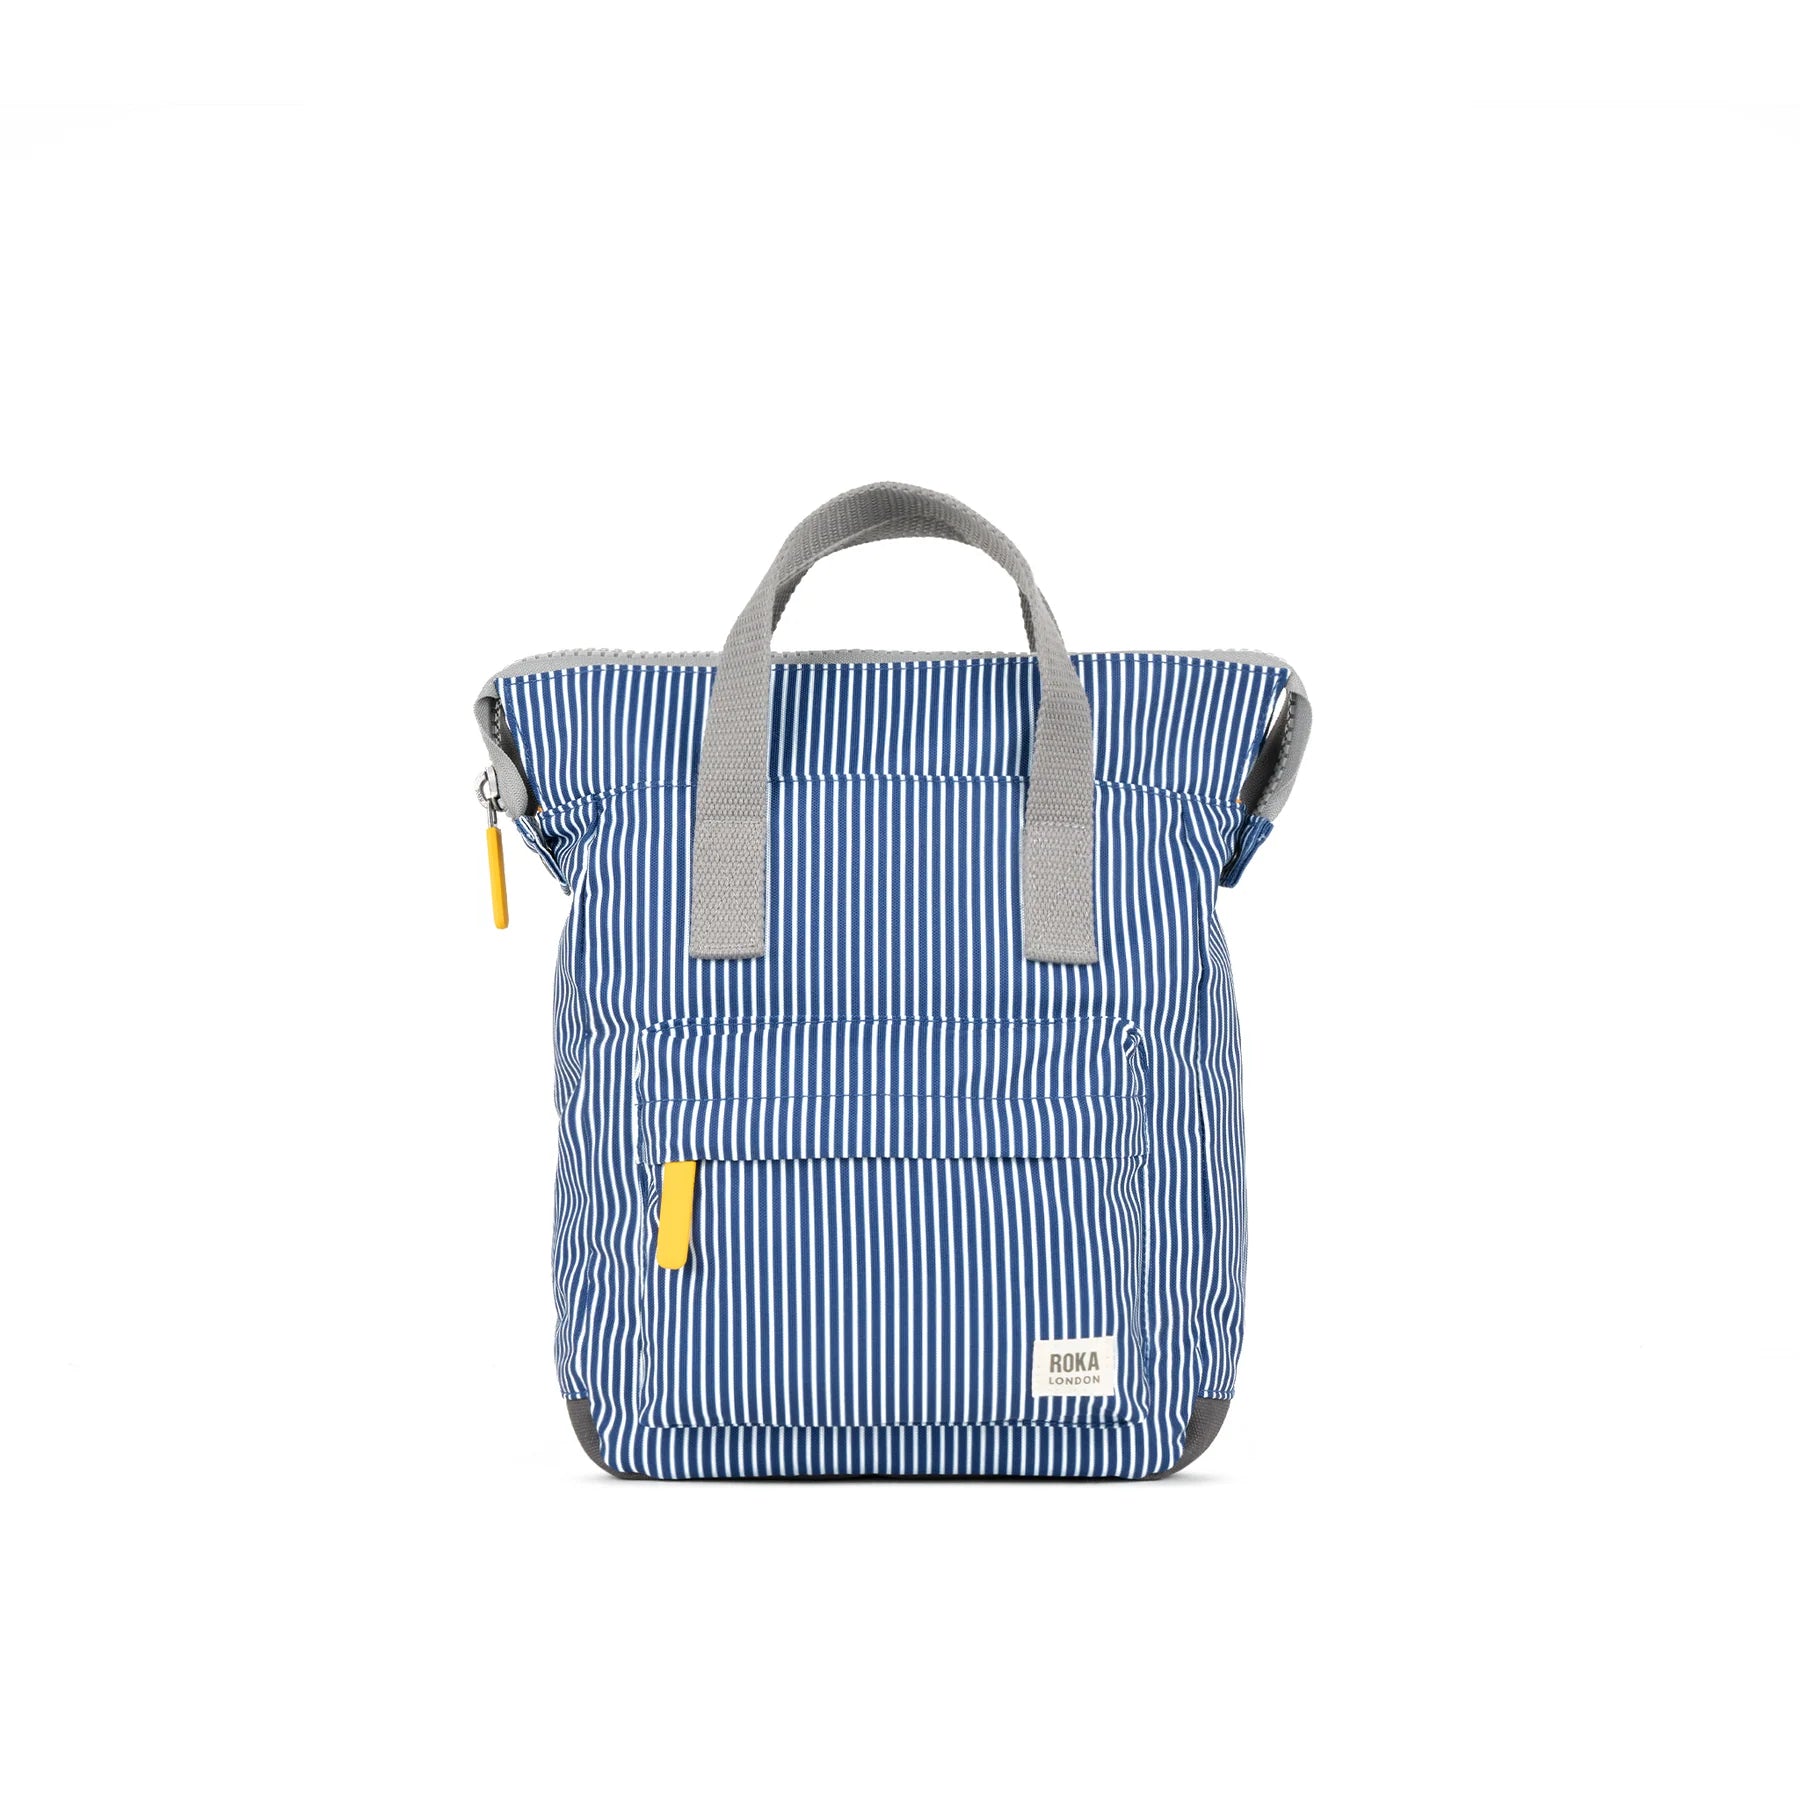 Roka London - Bantry B Sustainable Backpack | Small Hickory